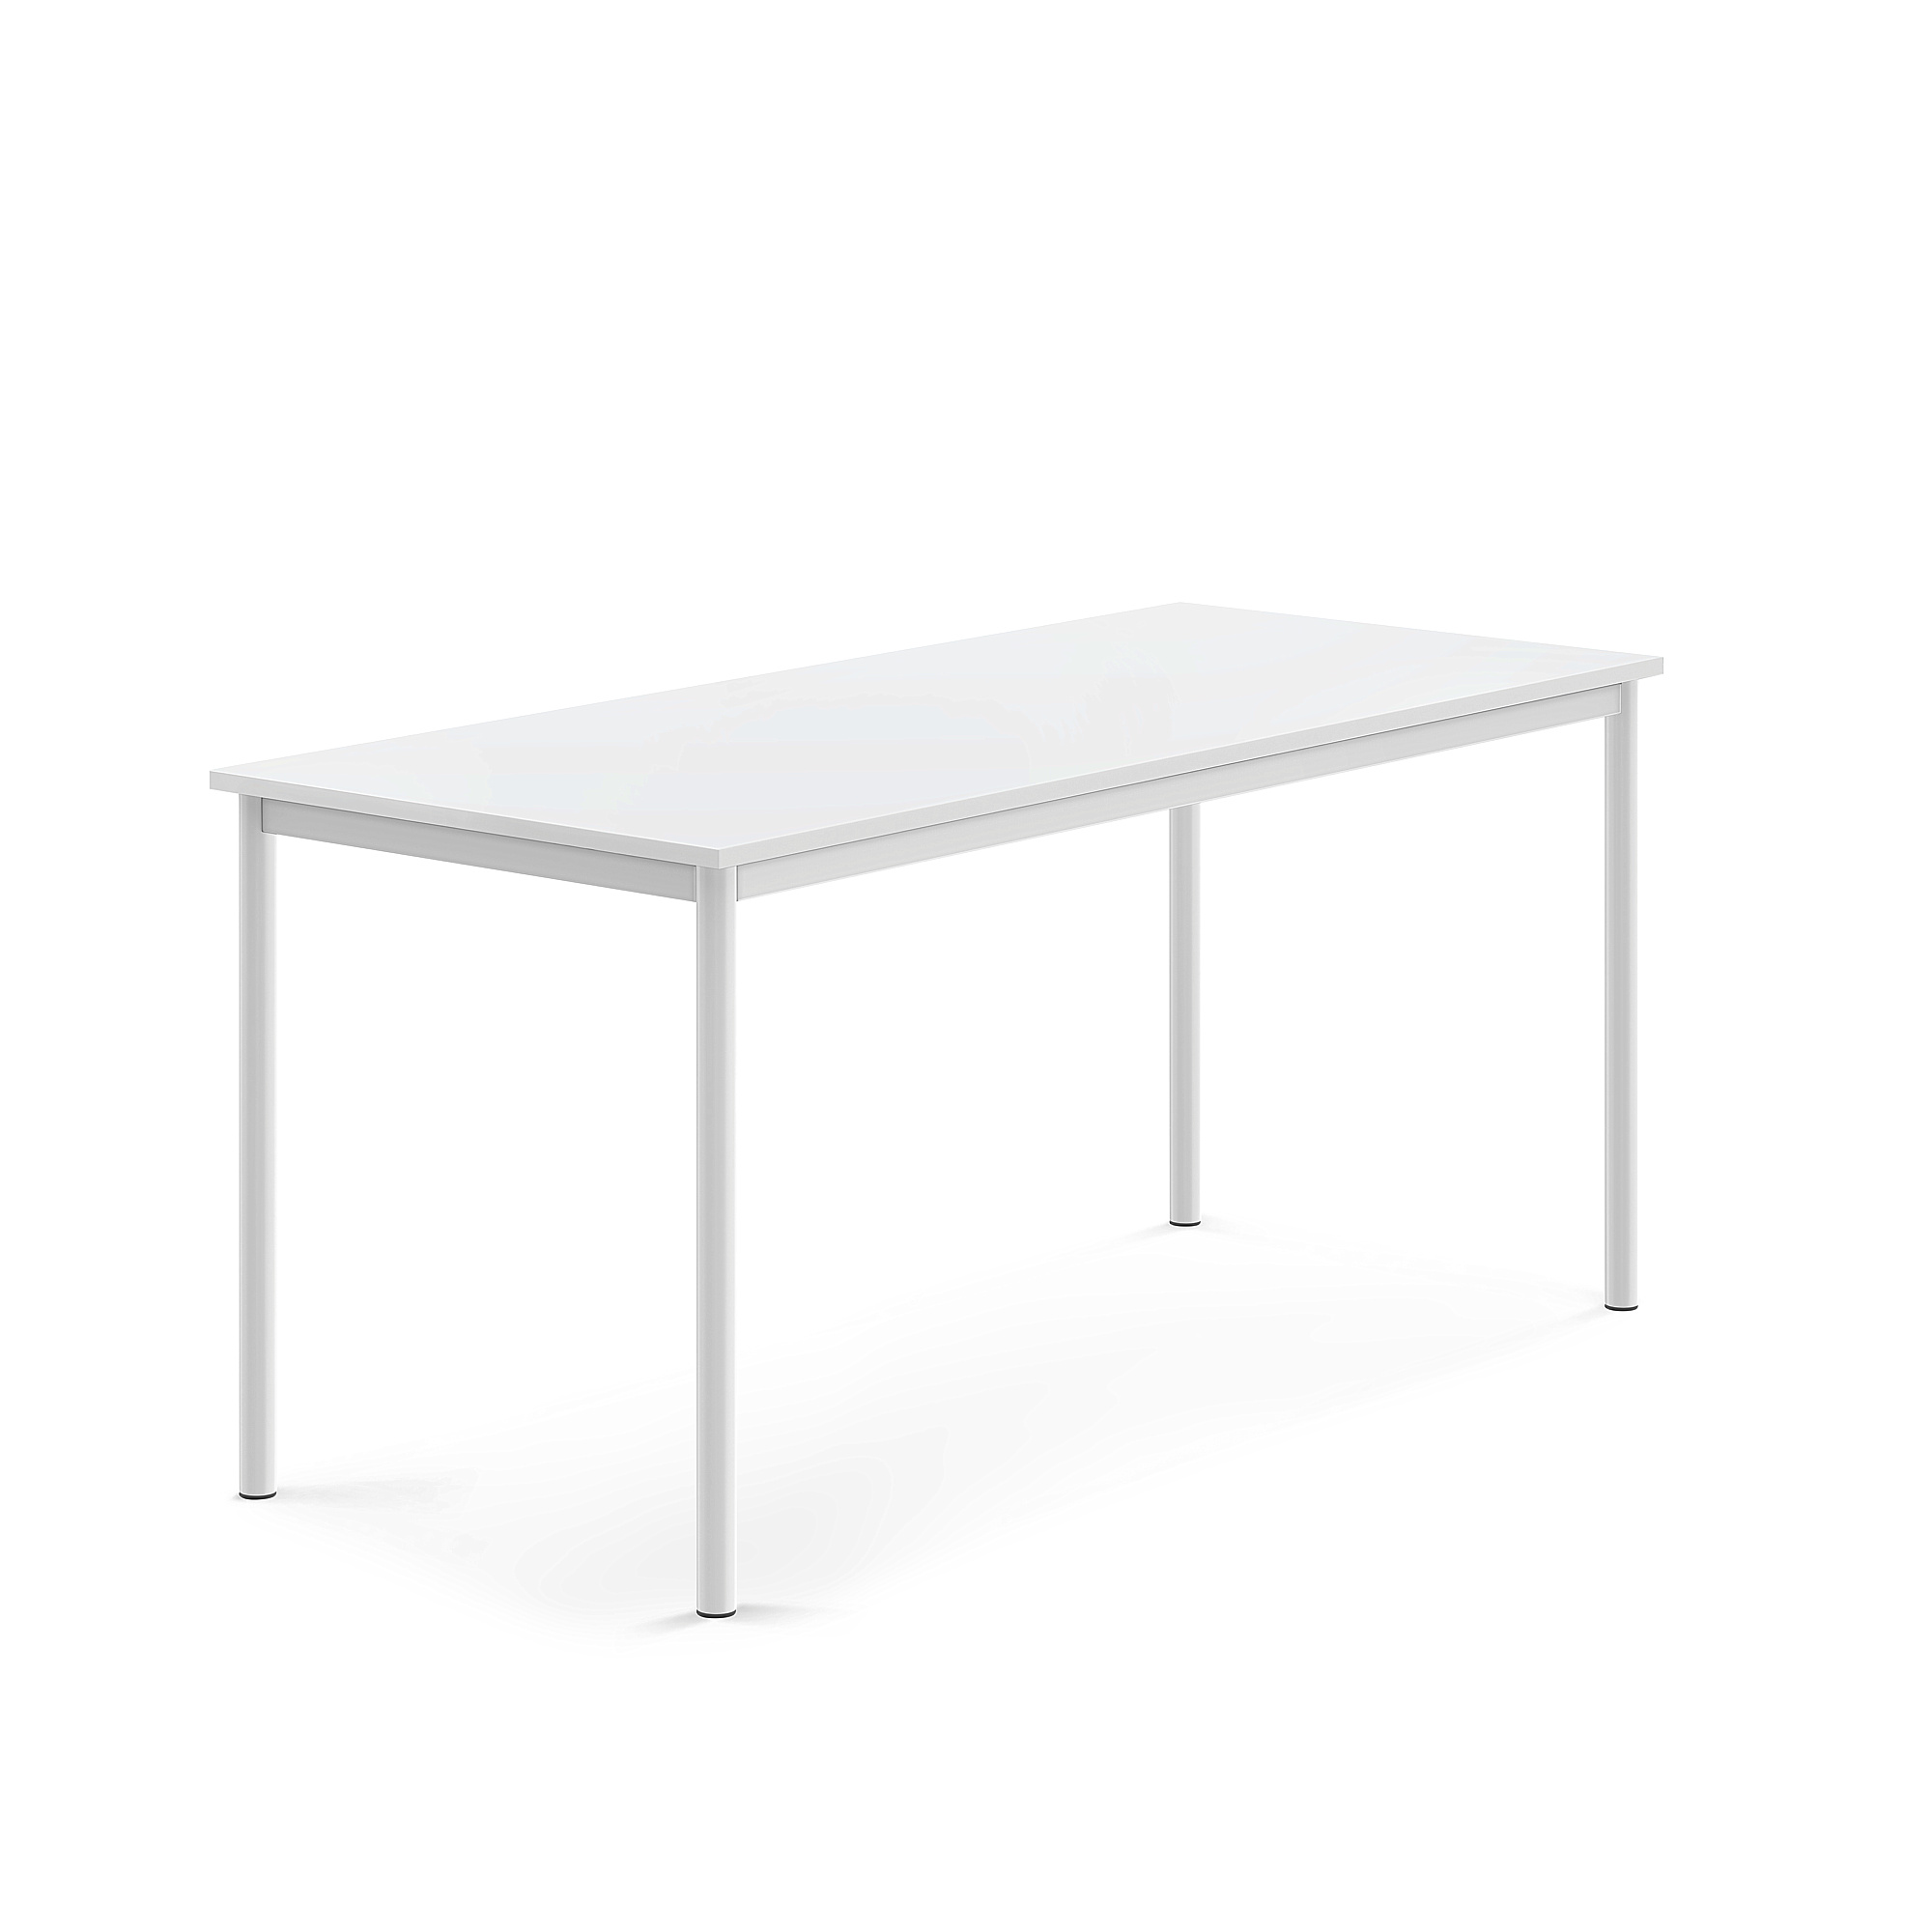 Stůl SONITUS, 1600x700x720 mm, bílé nohy, HPL deska tlumící hluk, bílá